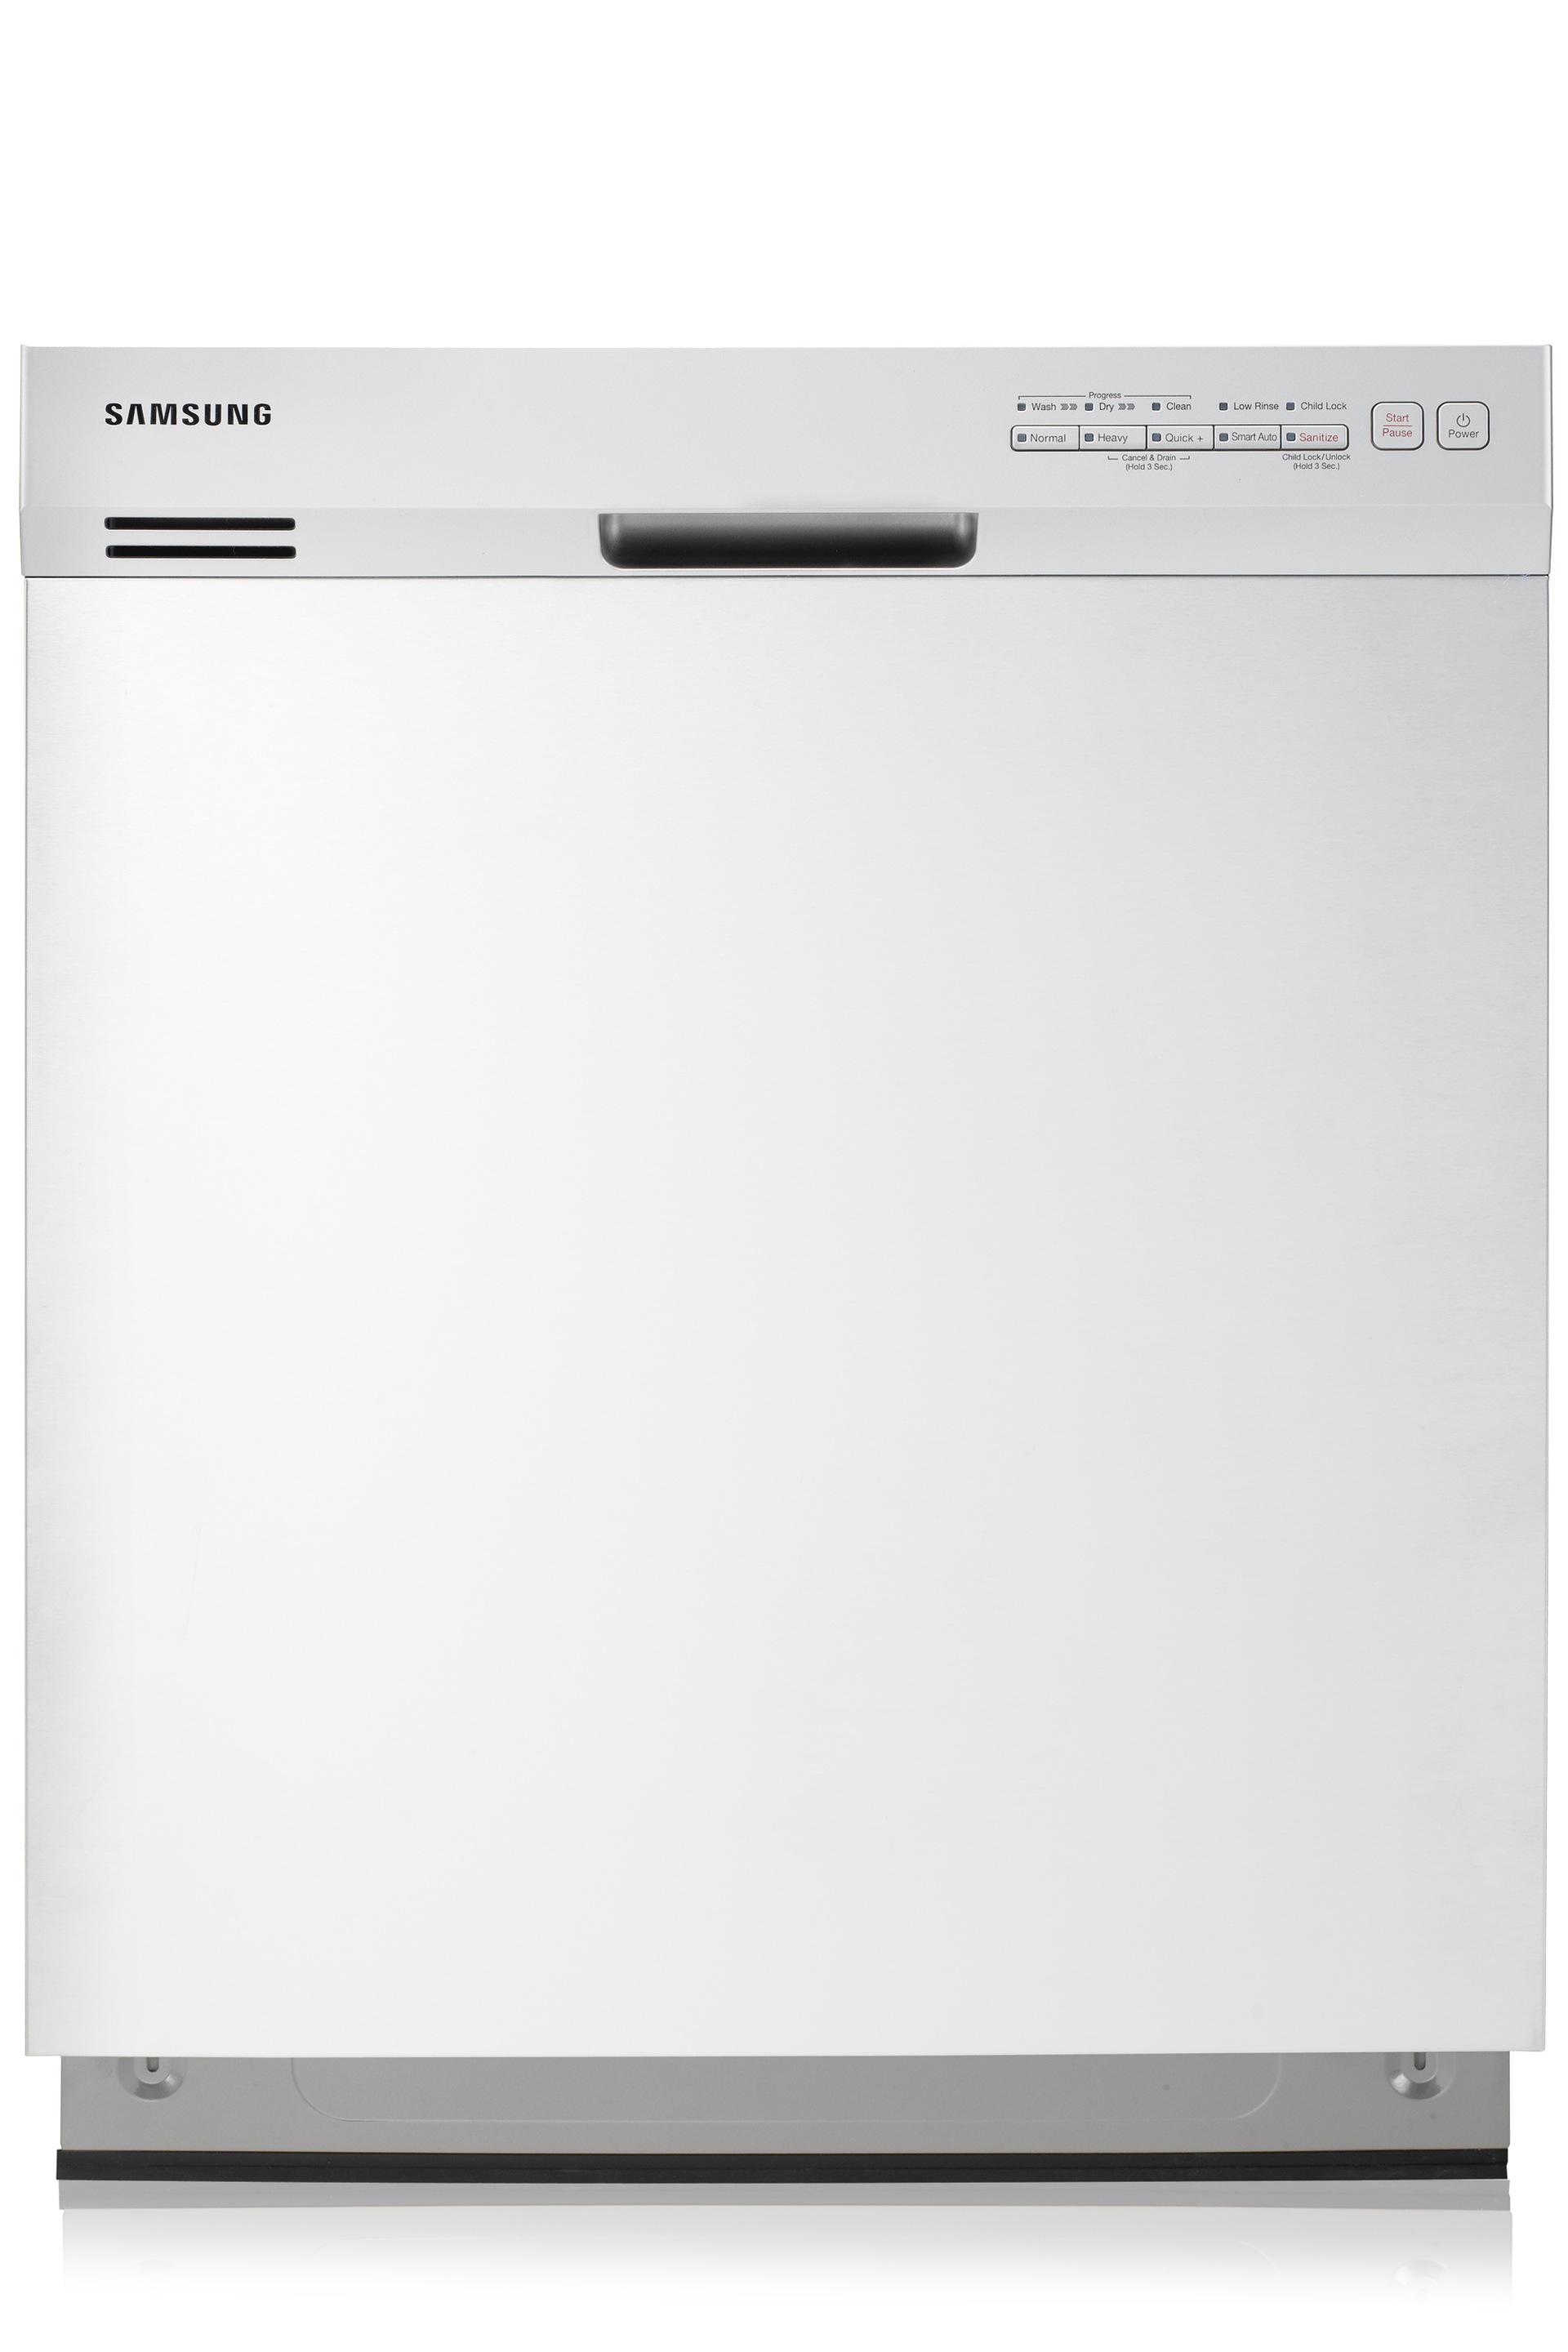 Samsung dishwasher manual